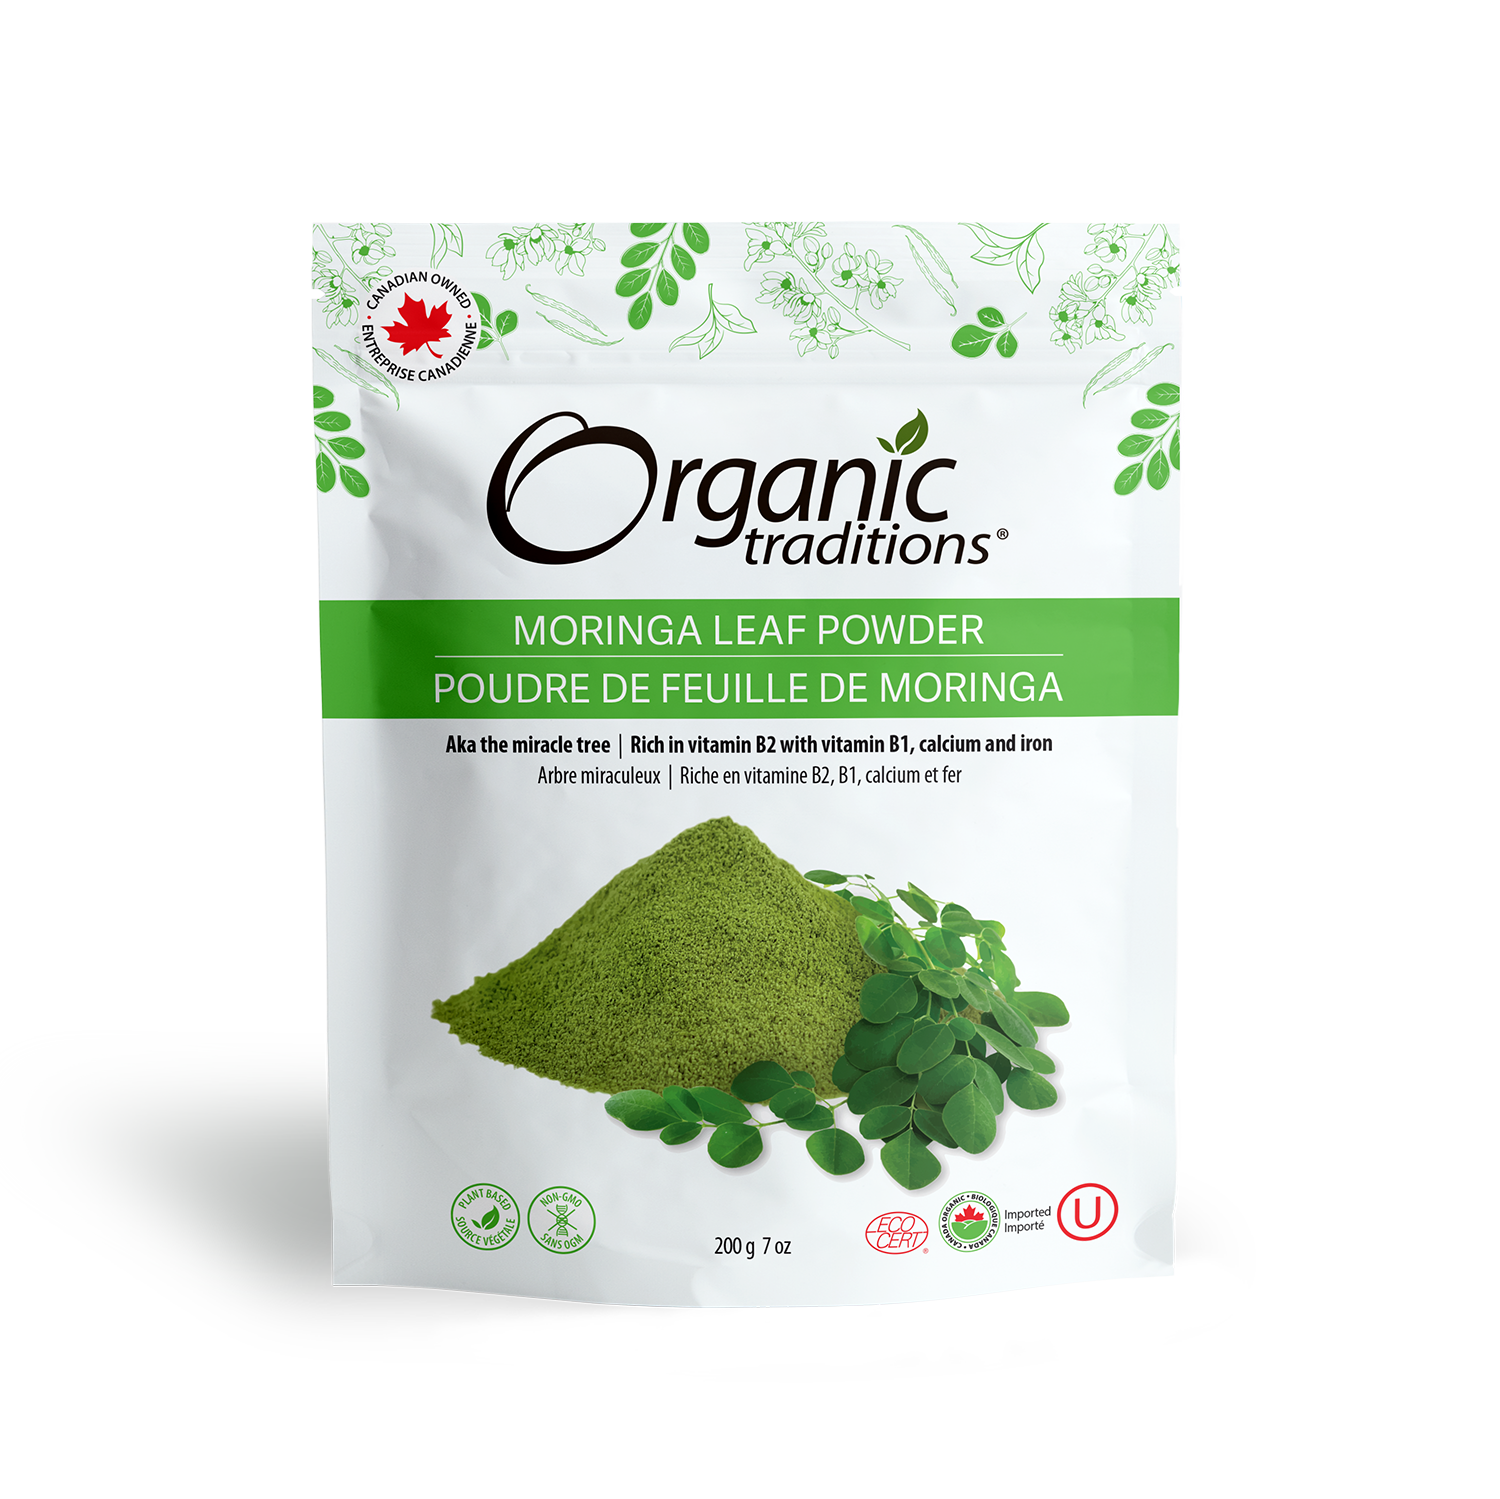 organic traditions moringa leaf powder front of bag image